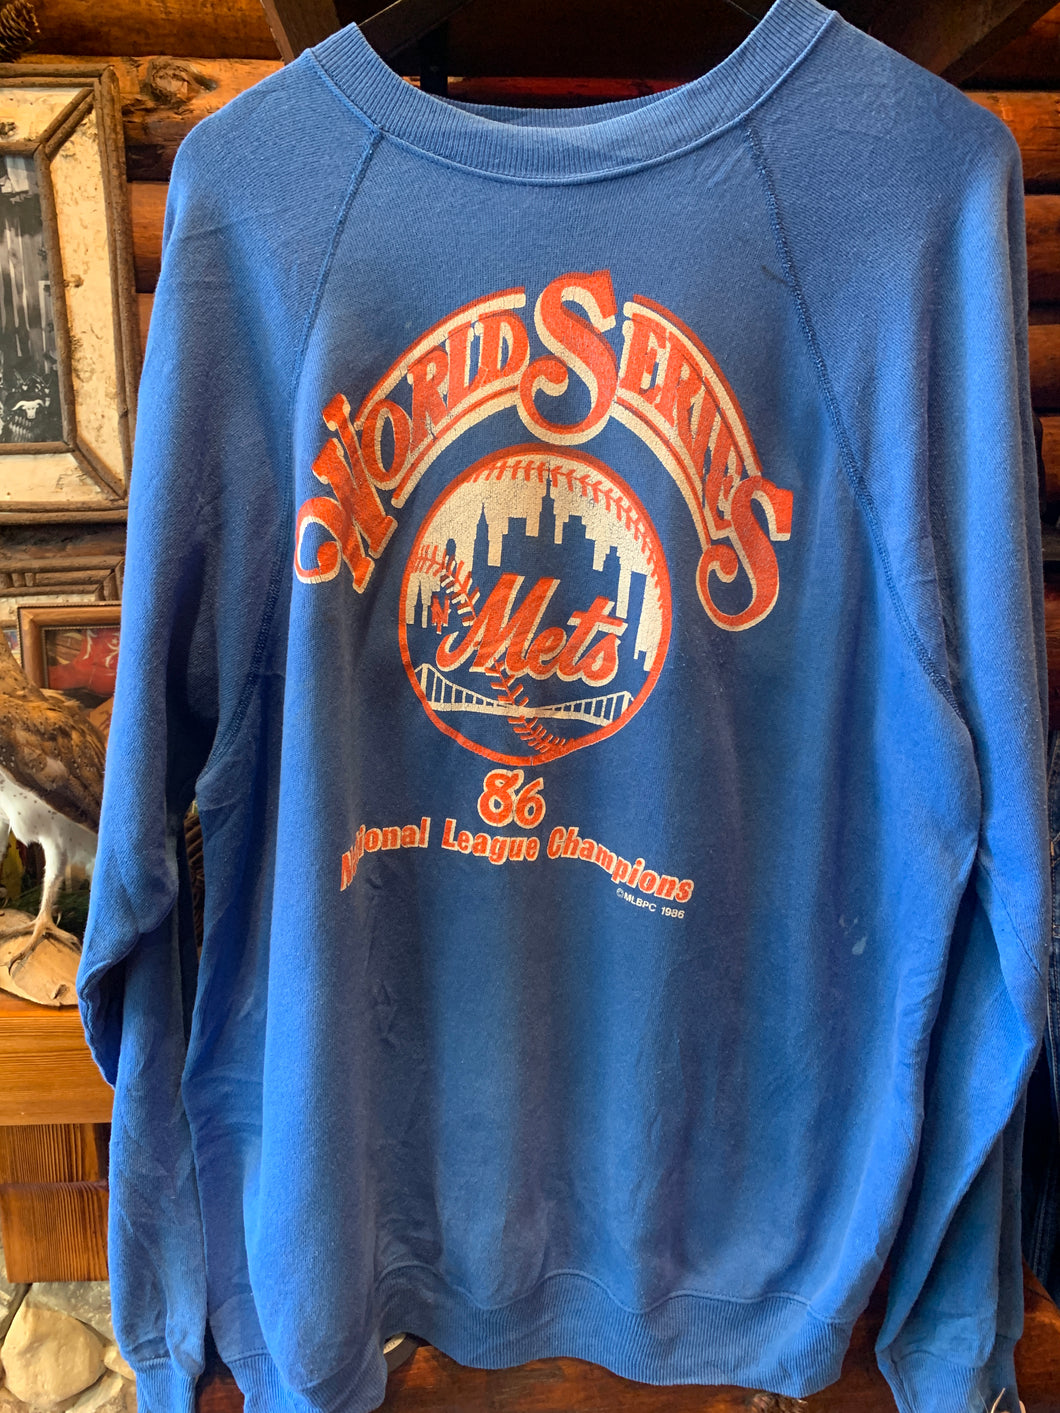 Vintage 1986 Mets World Series Sweater, L-XL